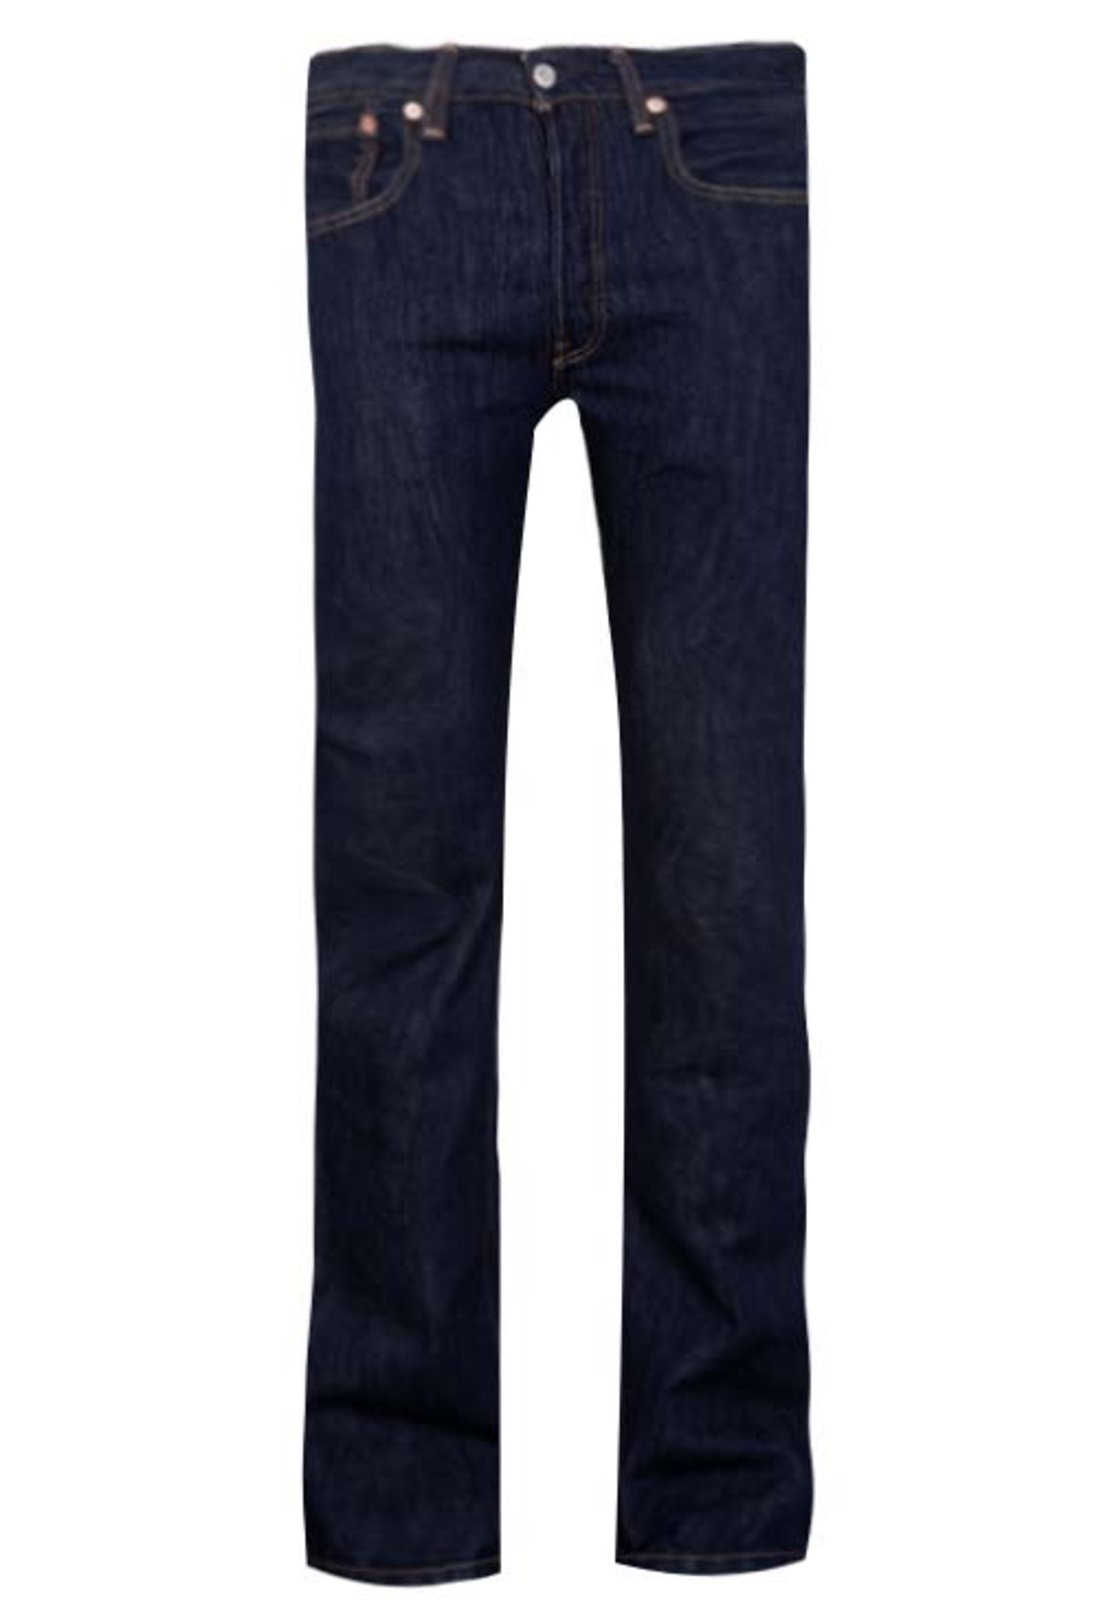 Calça Jeans Levis, Calça Masculina Levi'S Usado 85151936